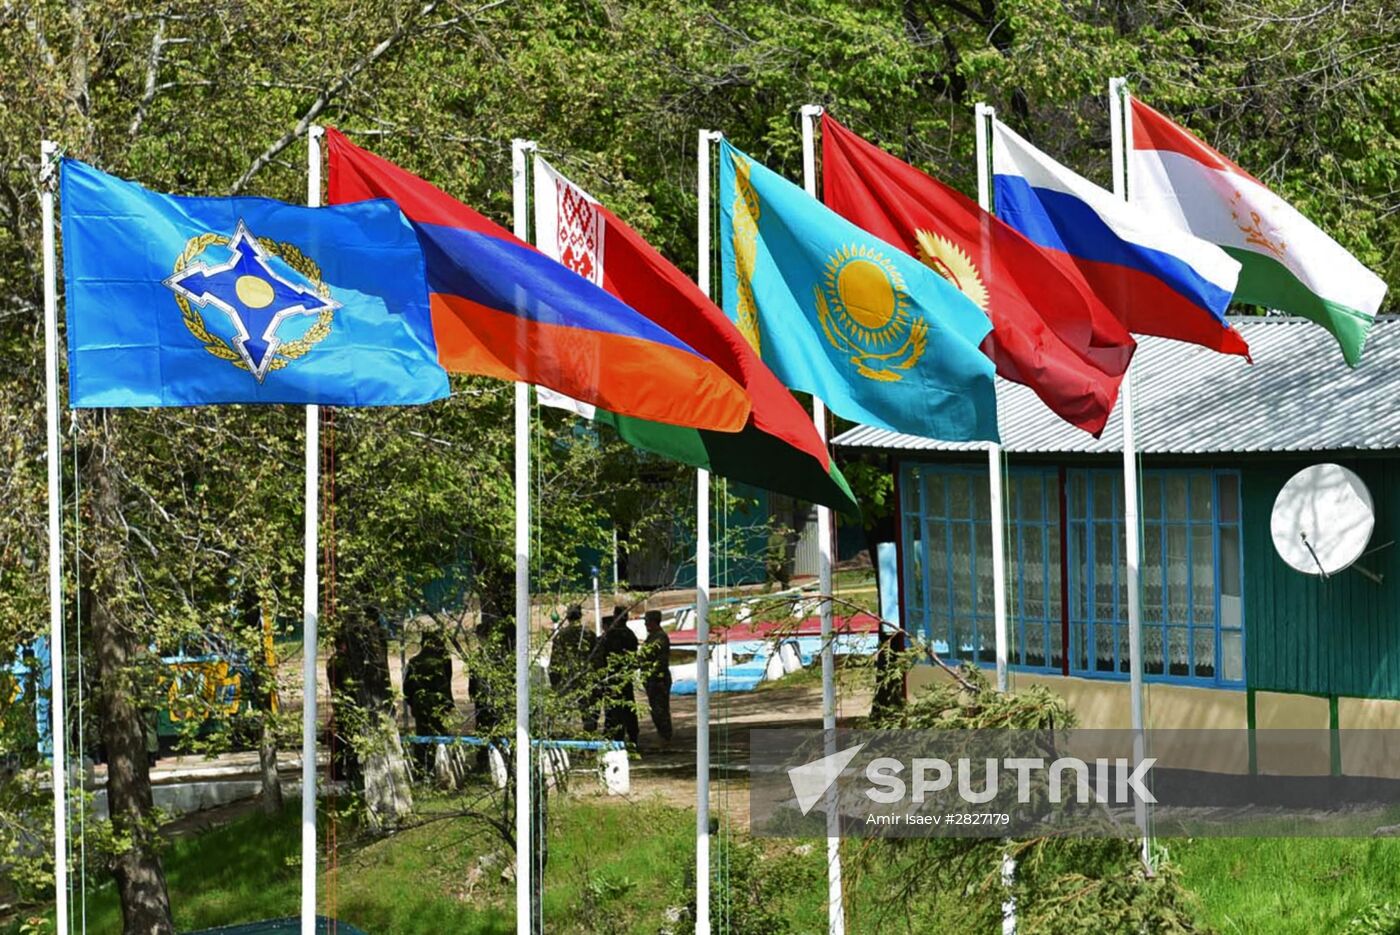 Poisk-2016 exercises of CSTO reconnaissance forces